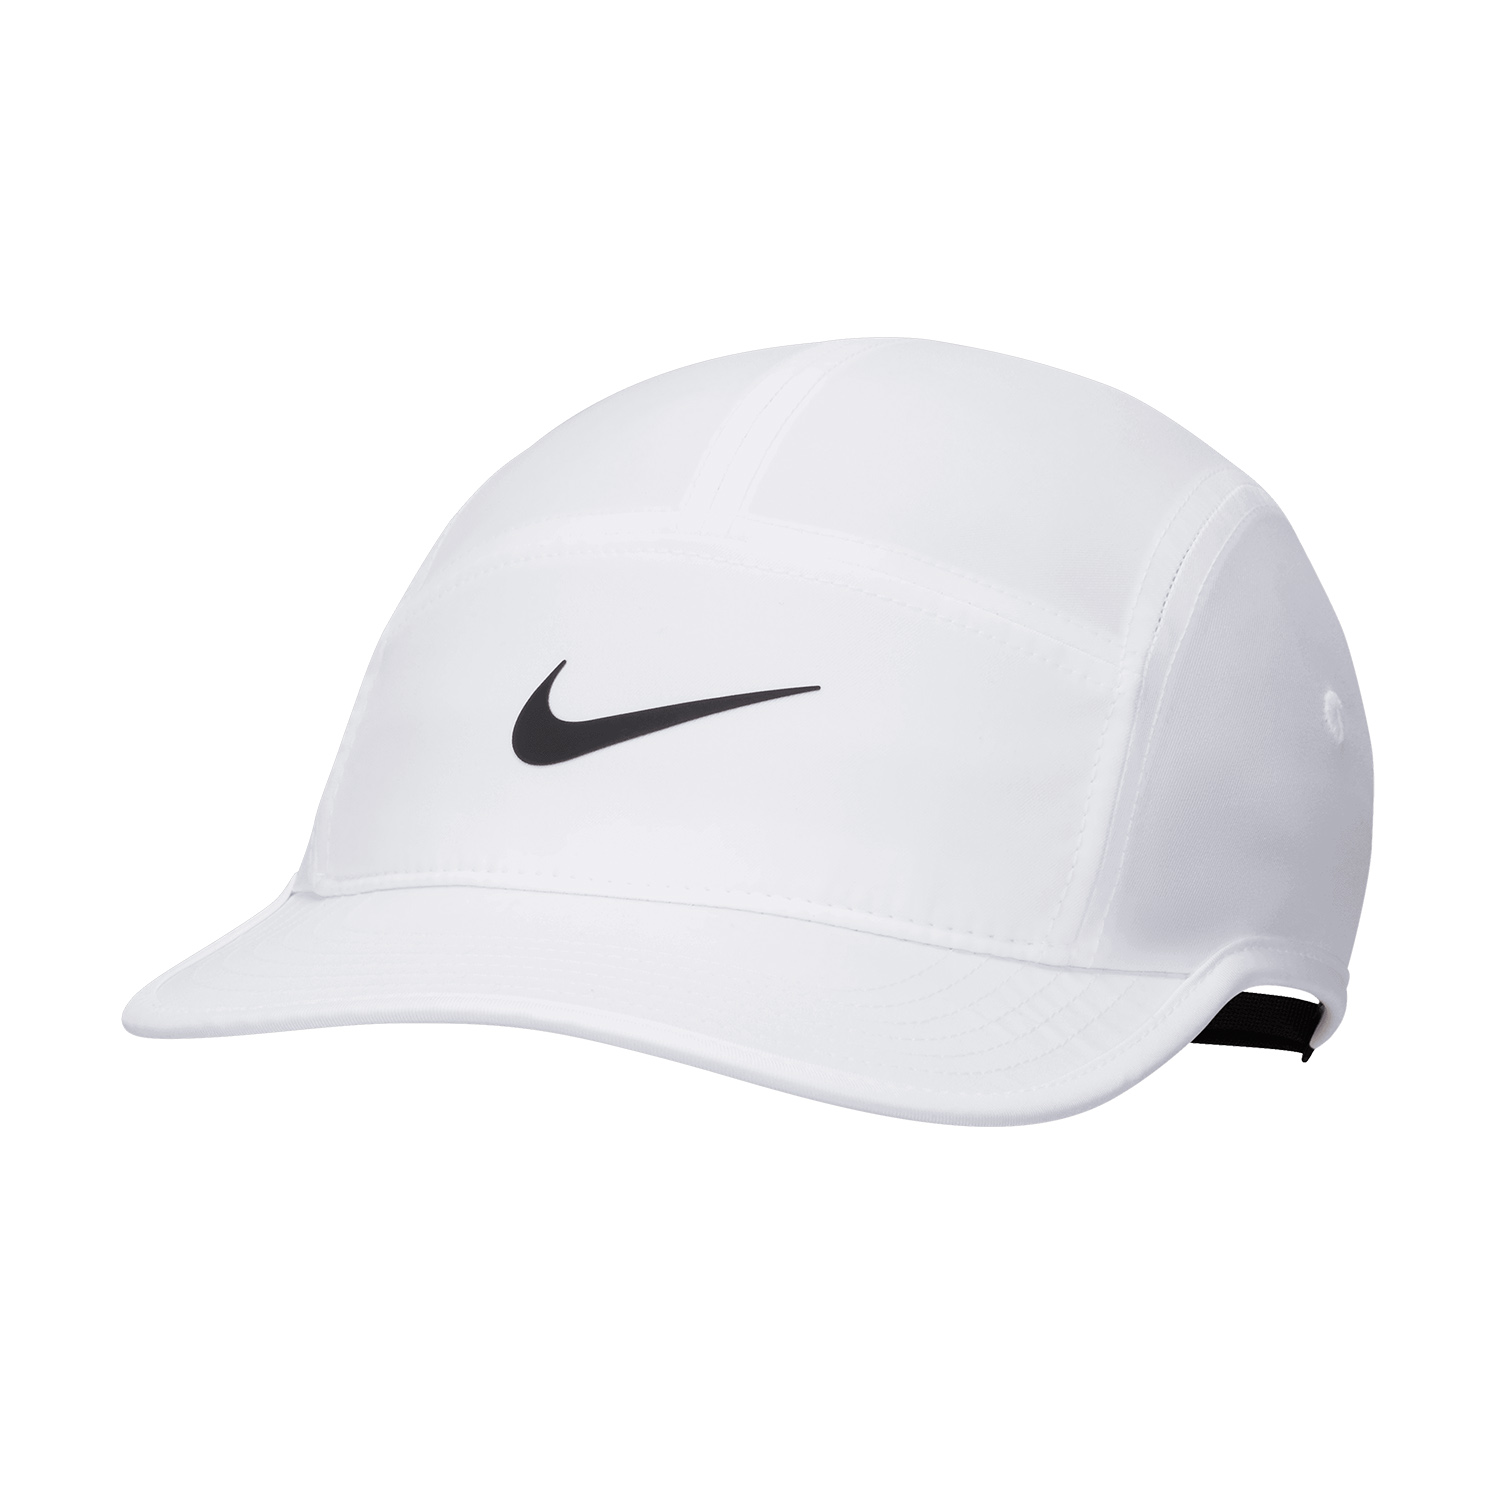 Nike Dri-FIT Fly Running Cap - White/Anthracite/Black